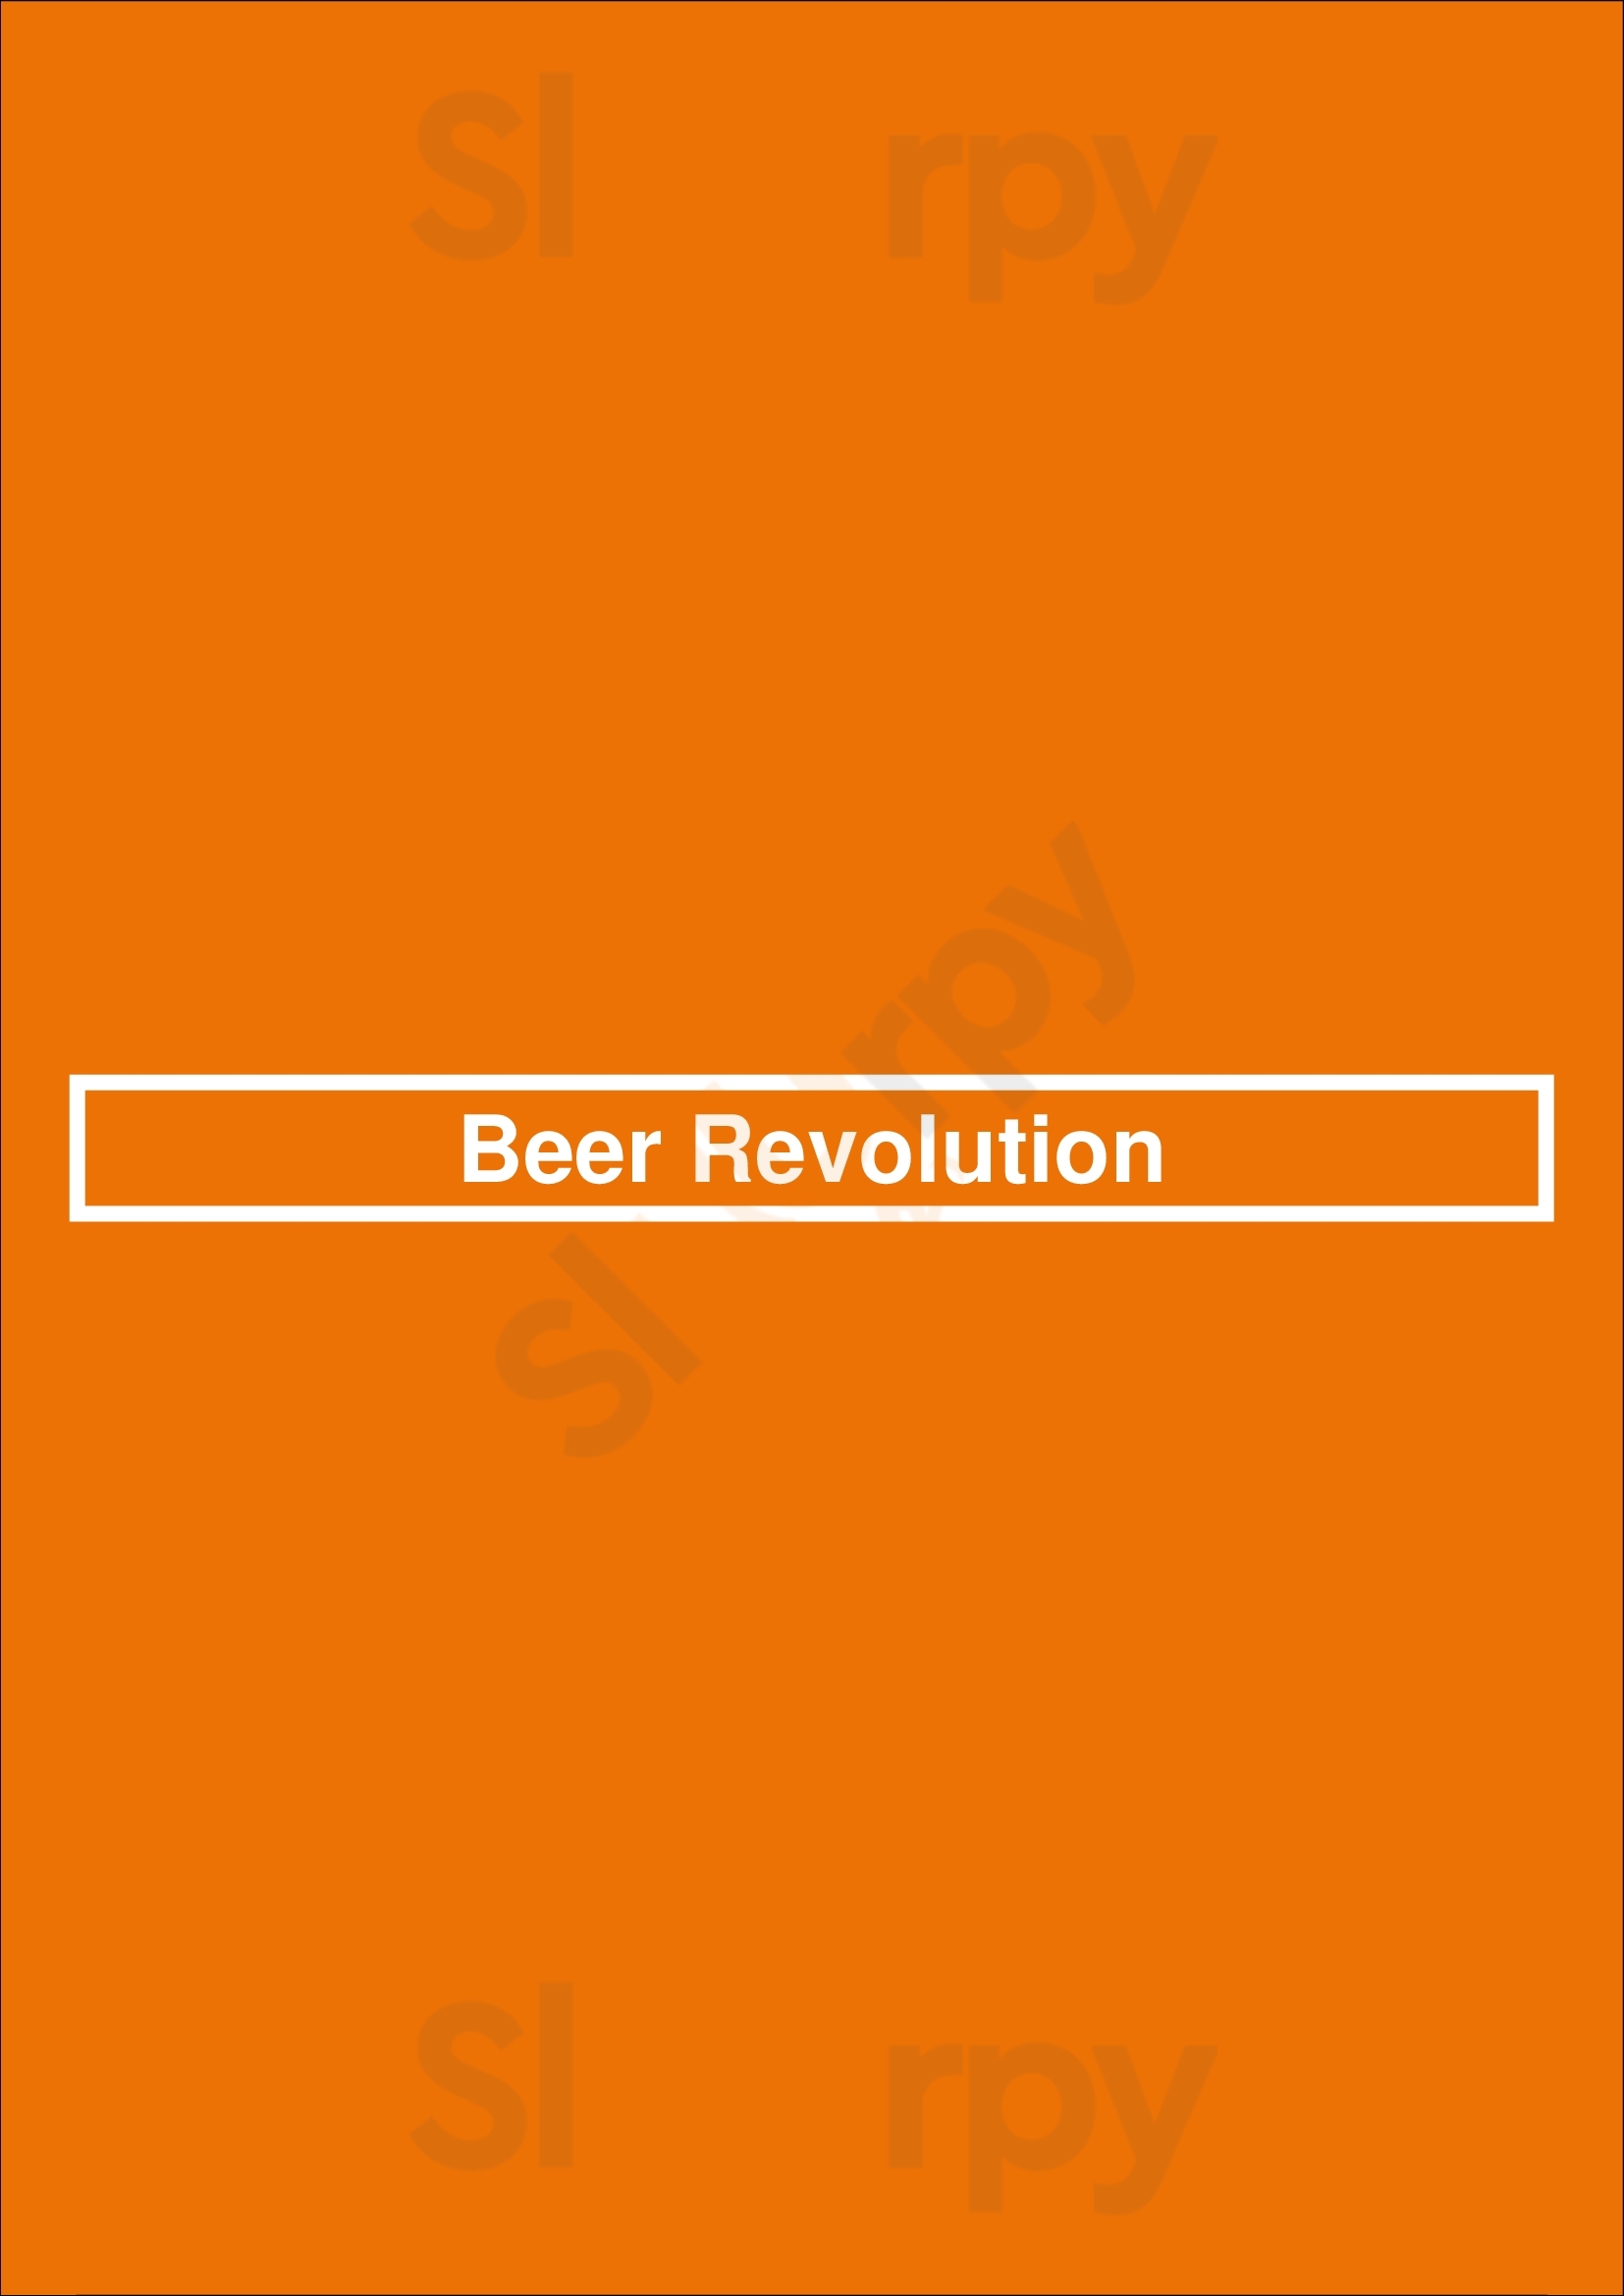 Beer Revolution Edmonton Menu - 1